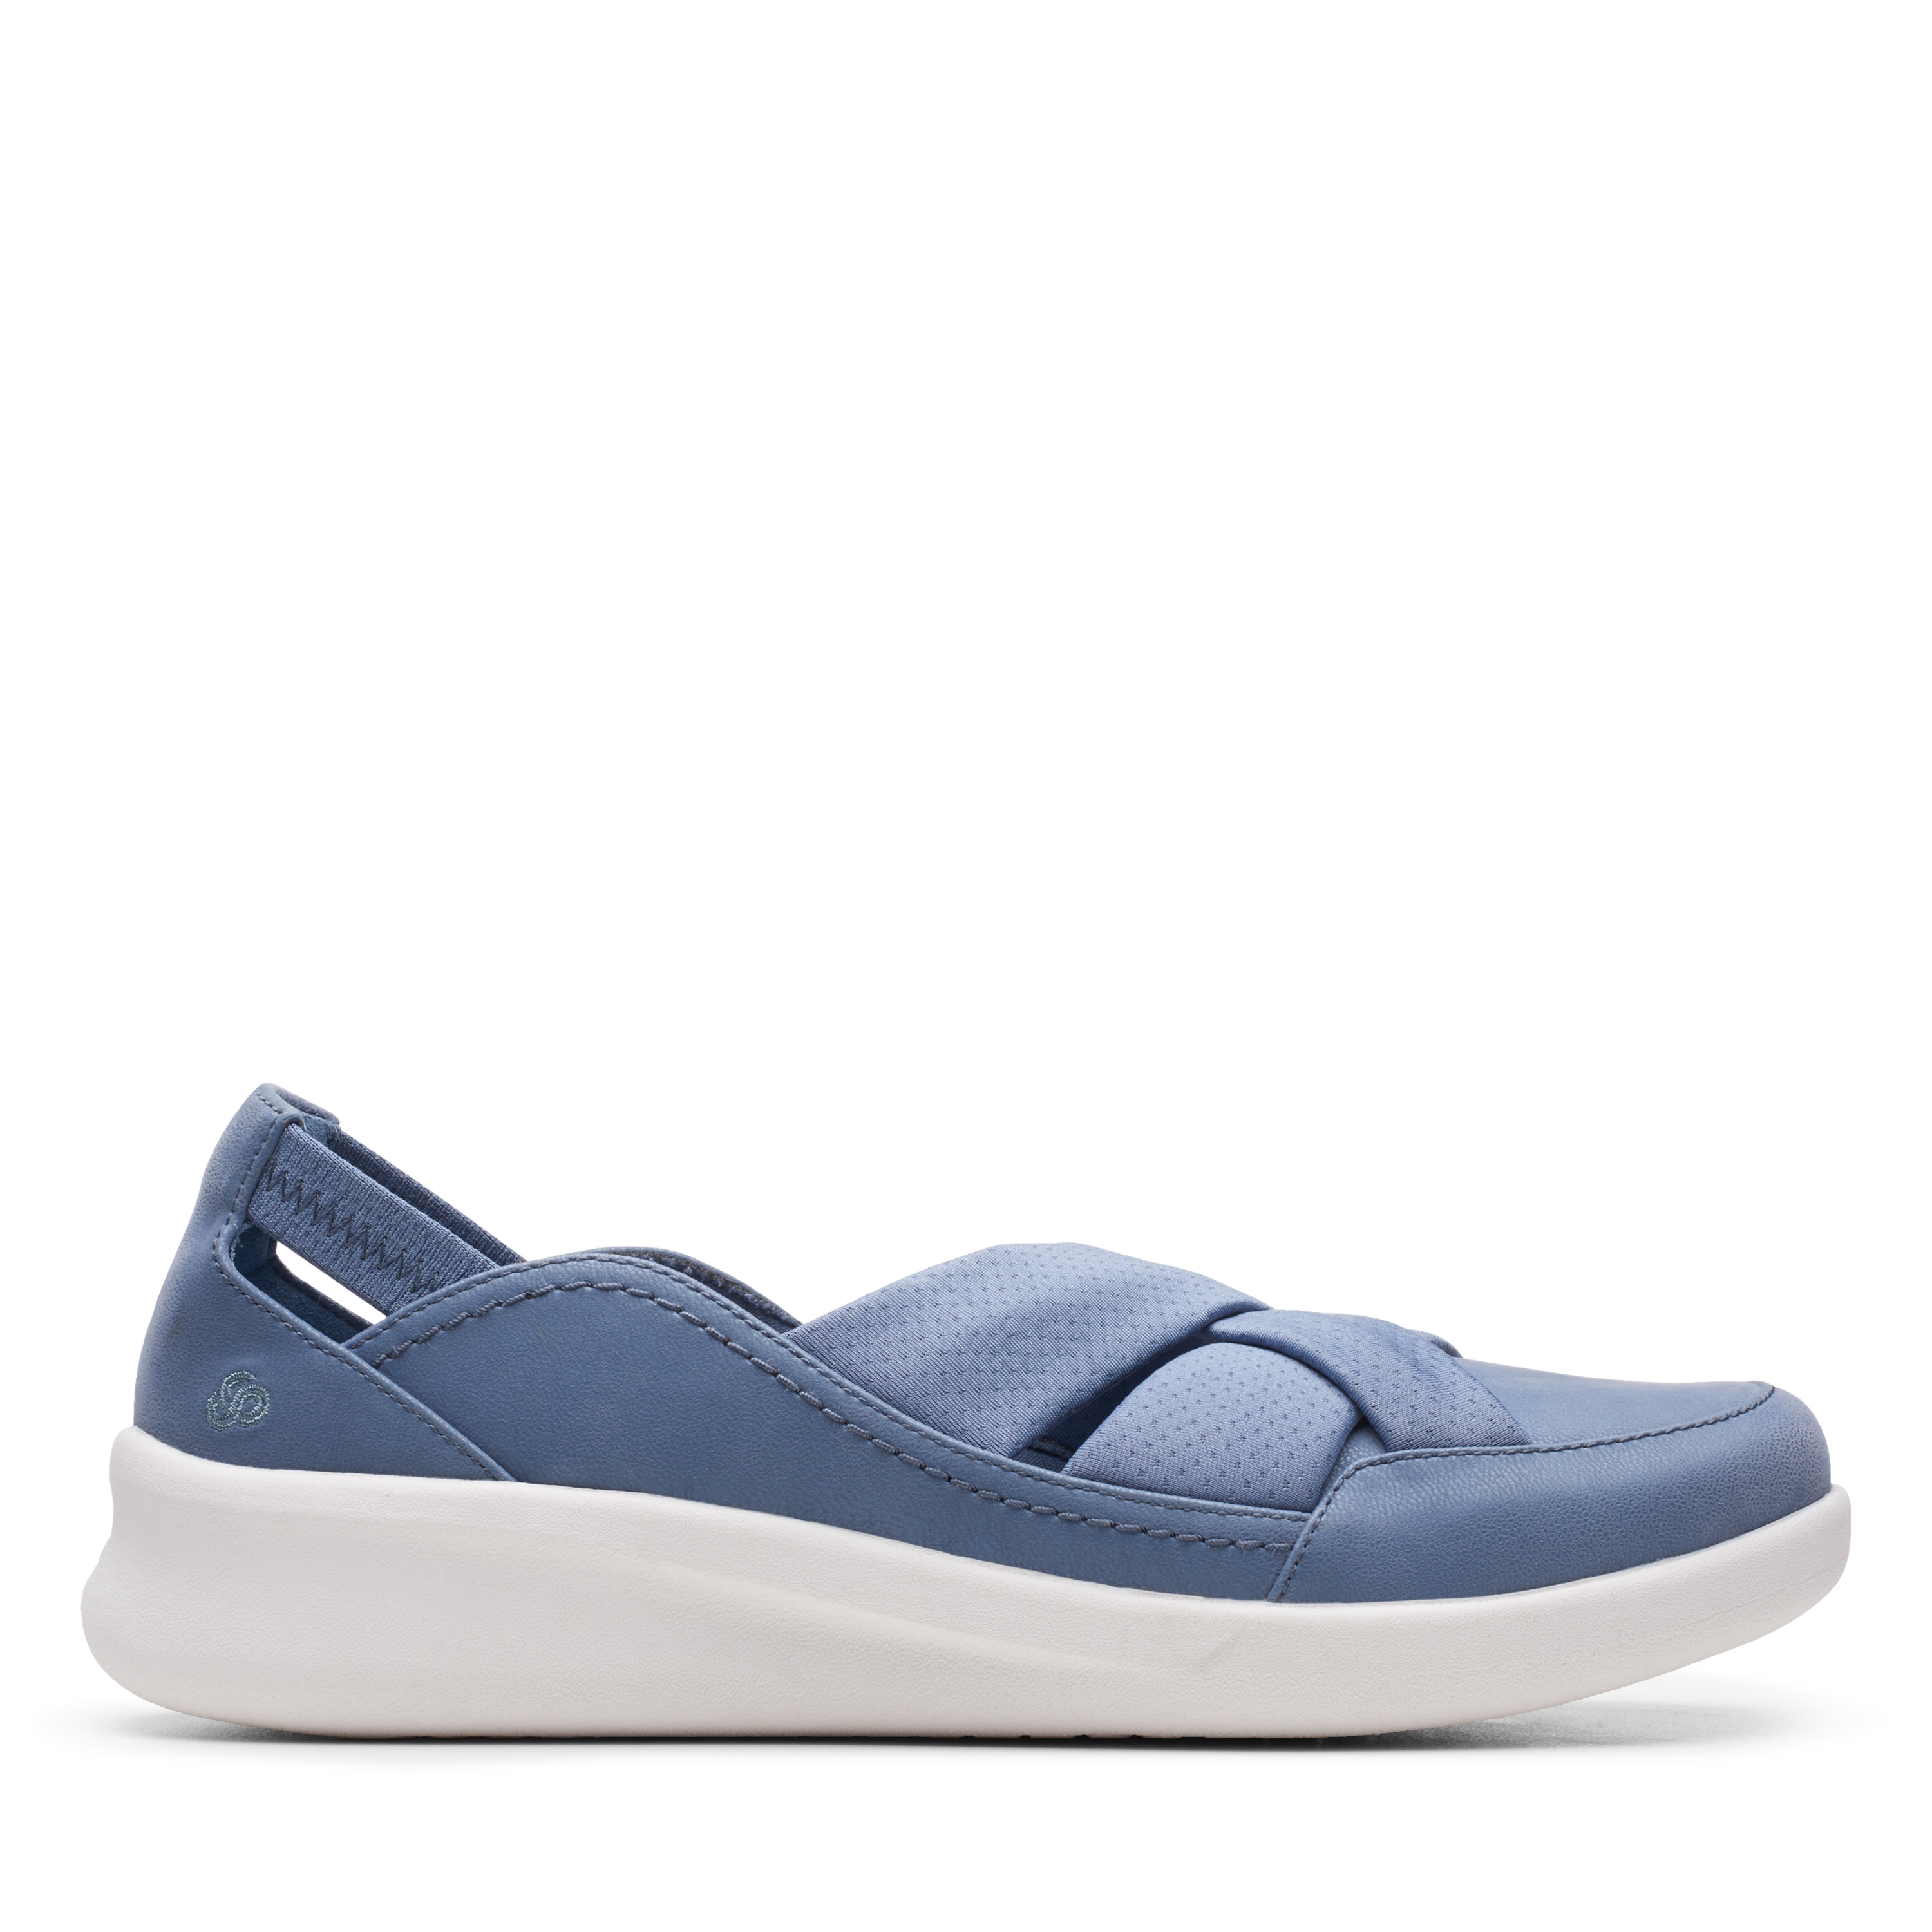 Clarks | Sillian2.0Star Blue Grey Slip On shoes